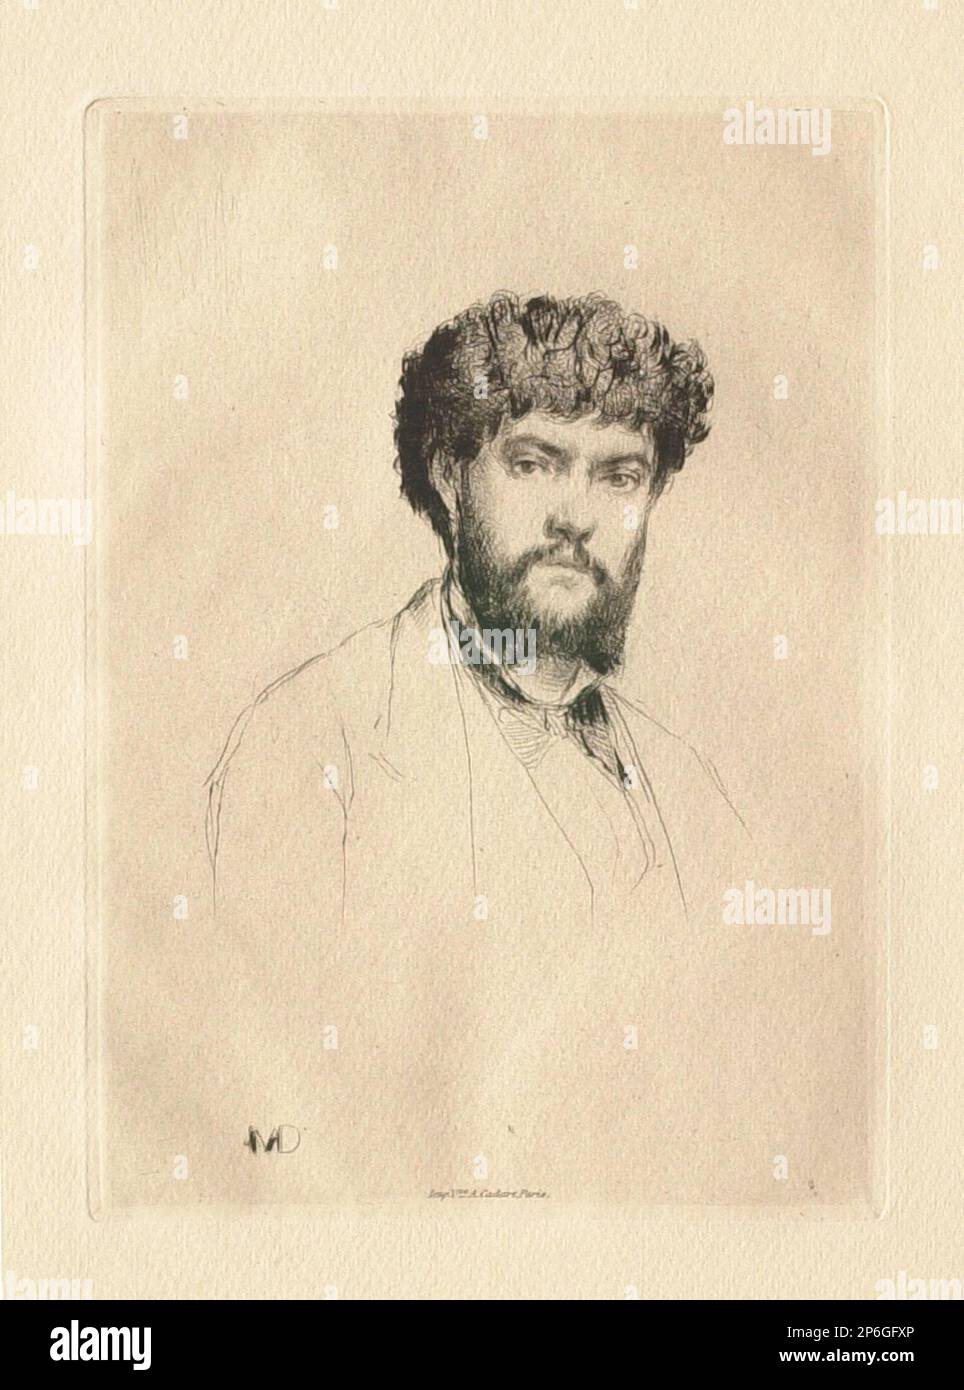 Marcellin Desboutin, Portrait von Jean Richepin de l'Académie Francois, 1877, Trockenstelle auf liegendem Papier. Stockfoto